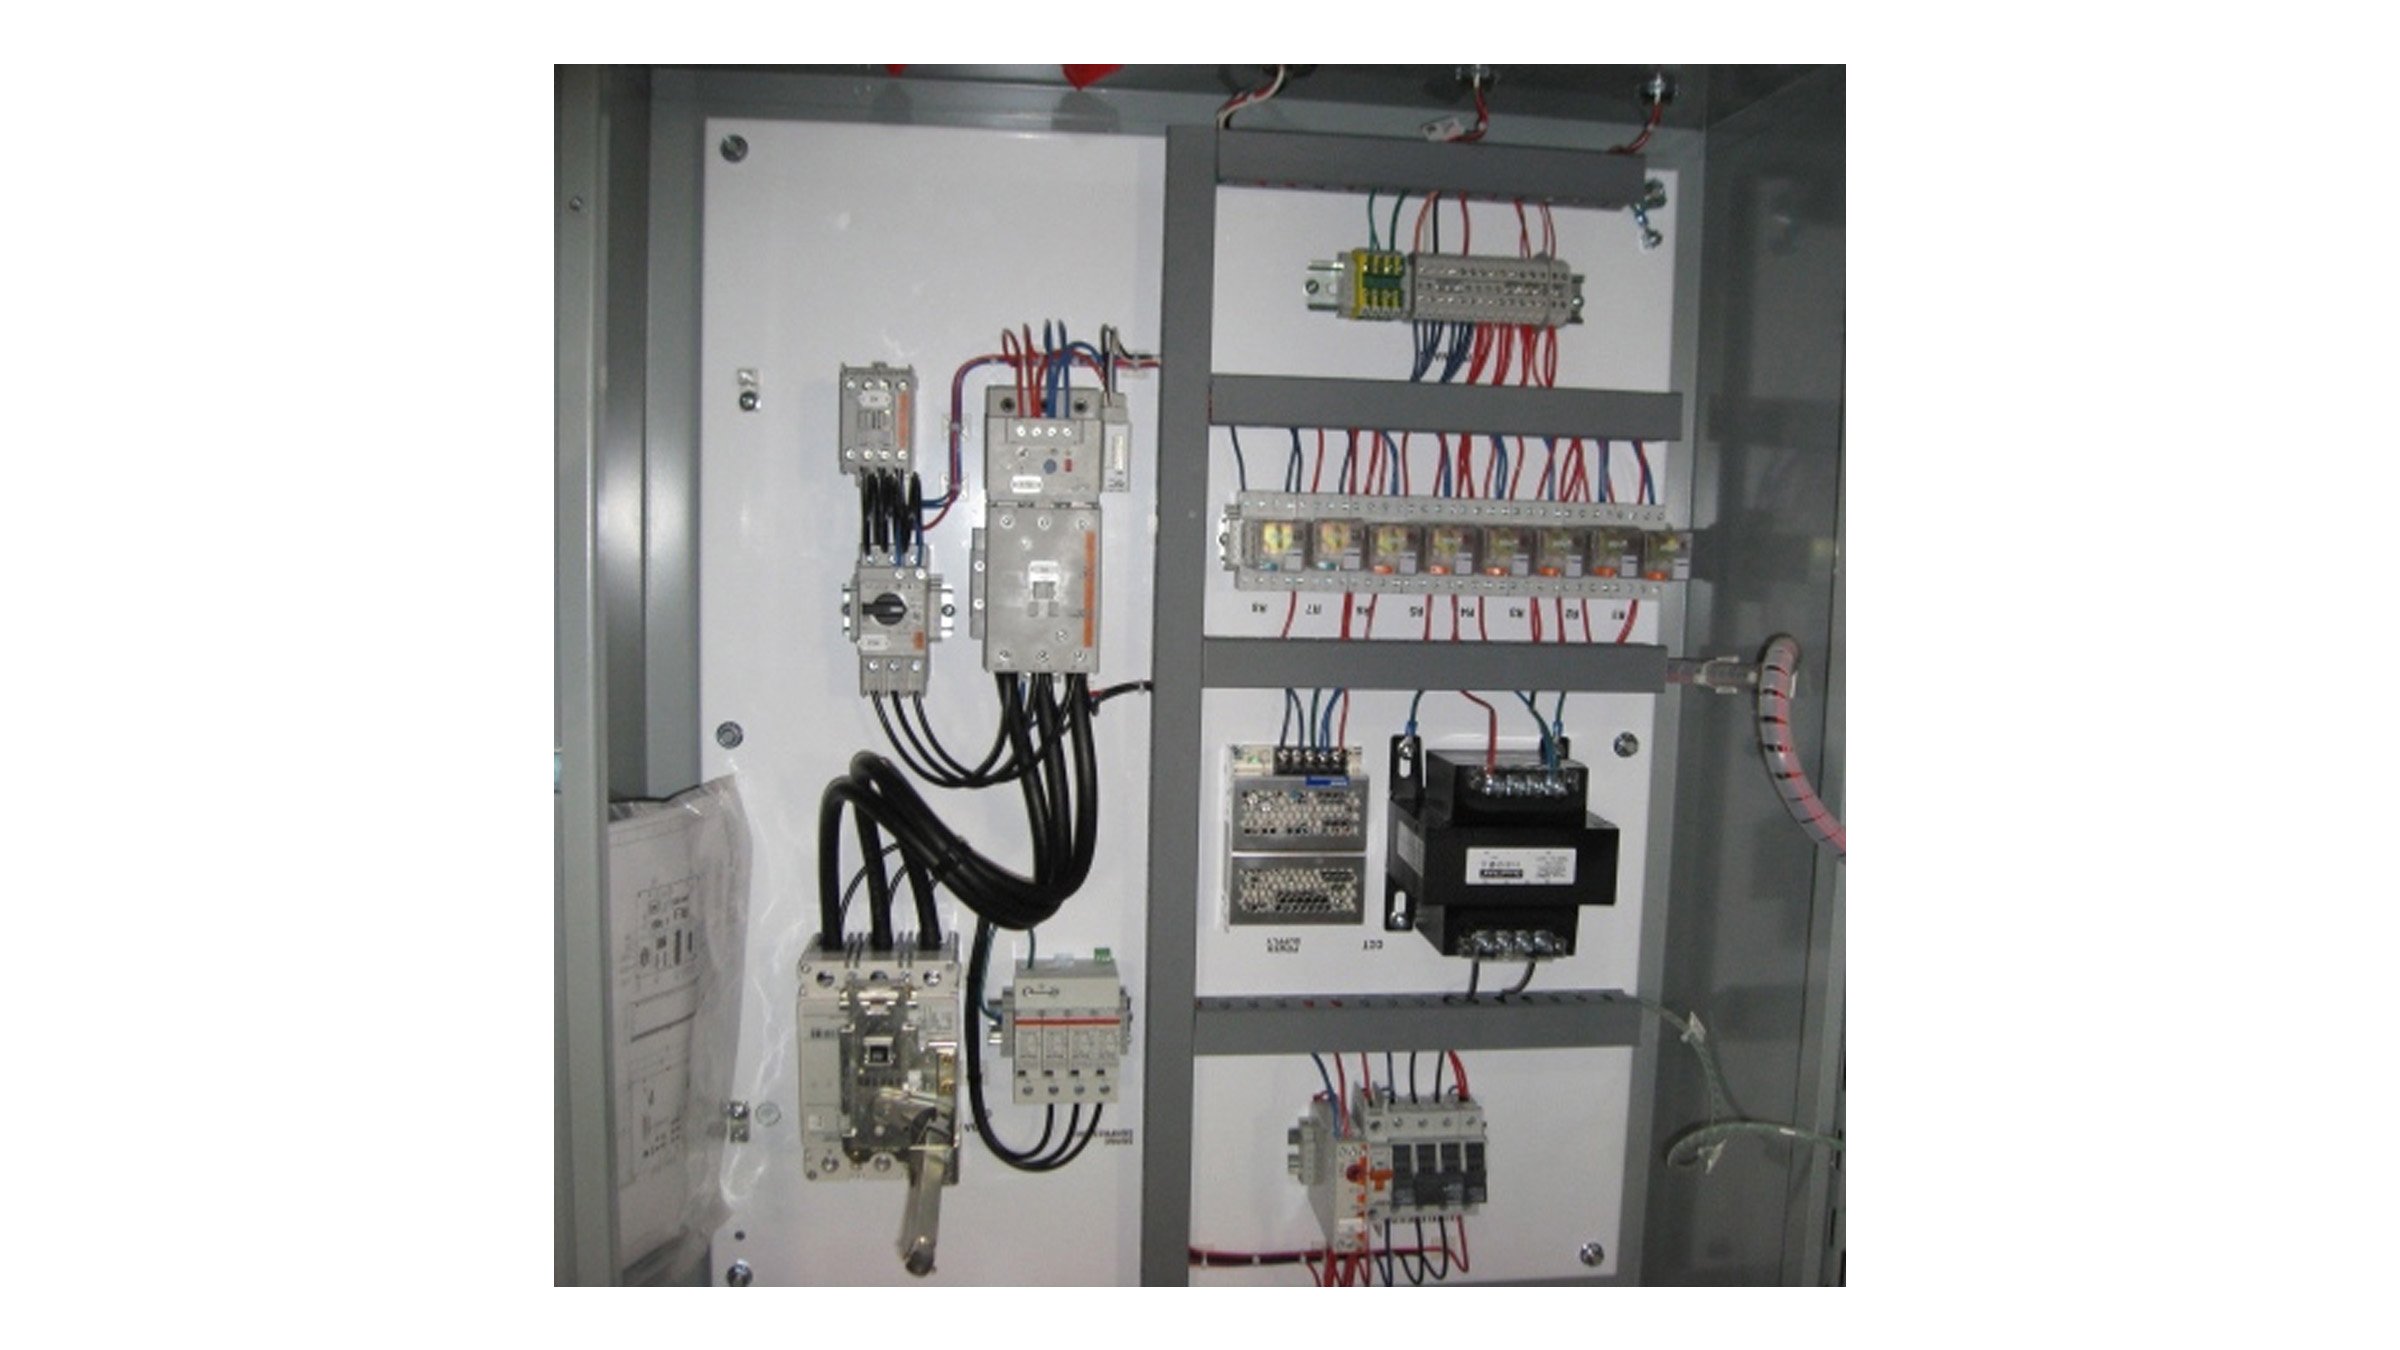 Interior of oil jacks control panel featuring Sprecher + Schuh CEP7 overload relays